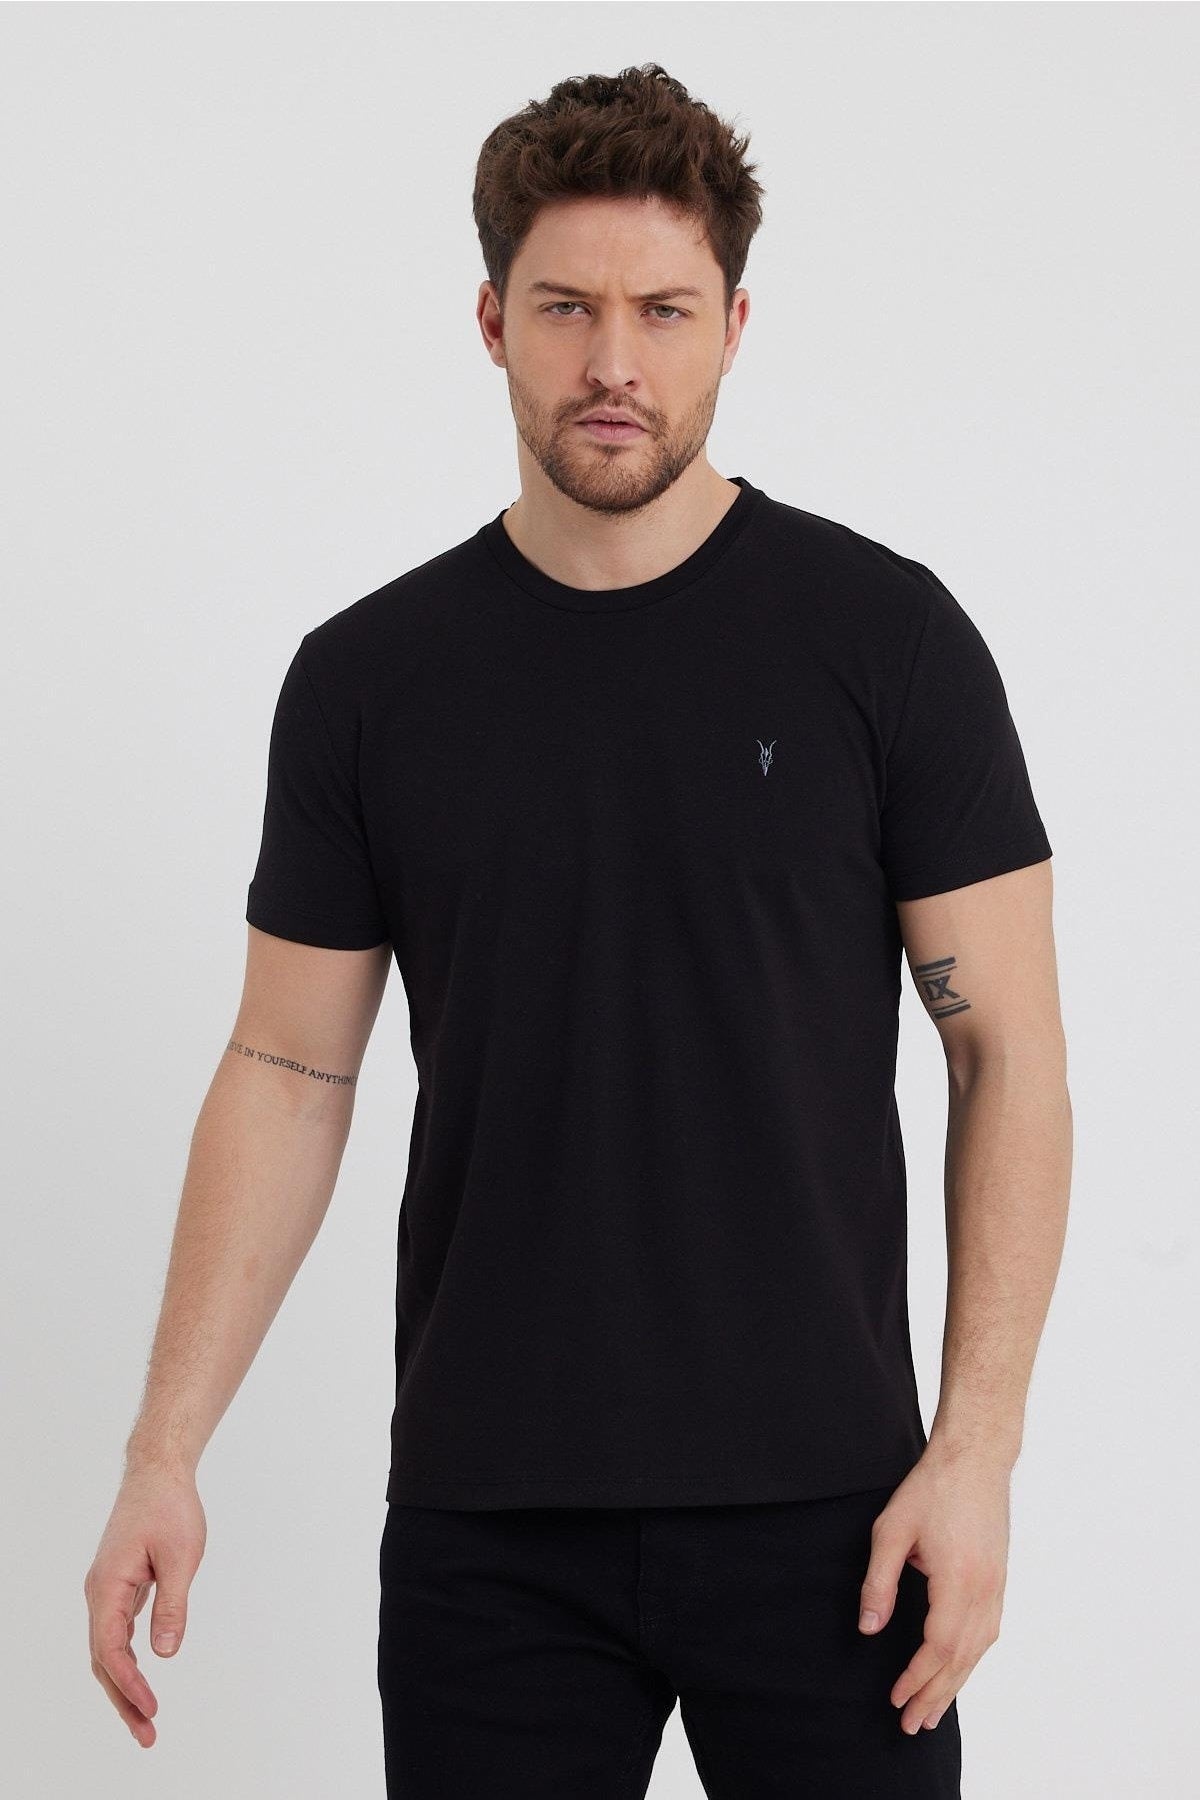 Standard Pattern Men's 5-Pack T-shirt